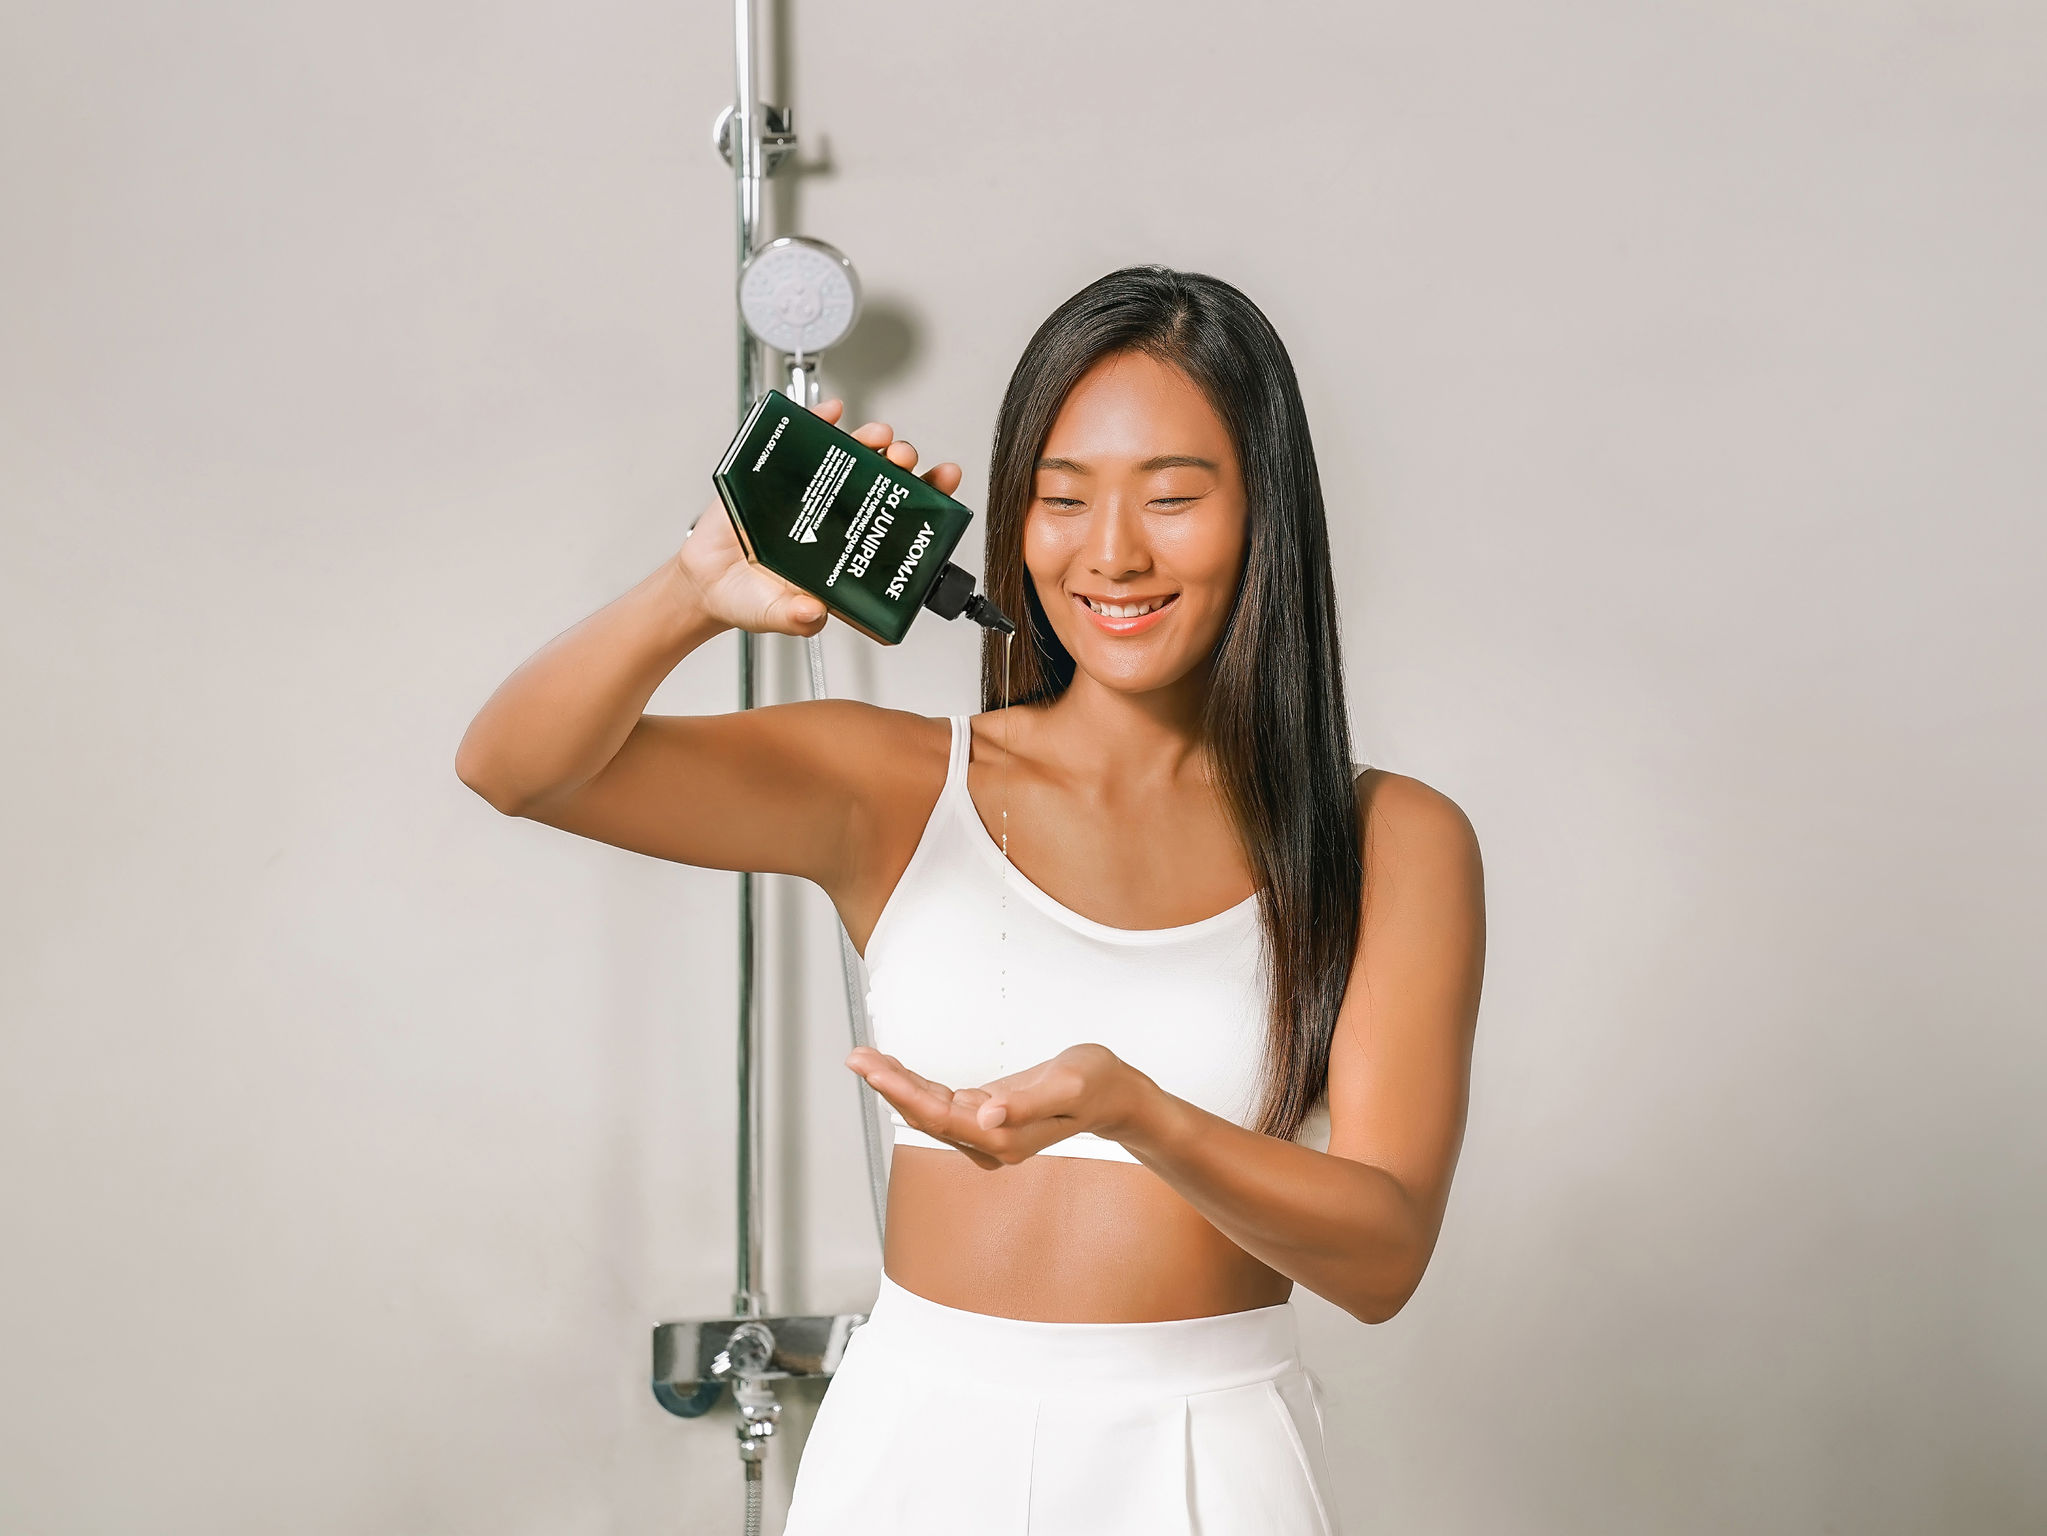 AROMASE-5α Juniper Scalp Purifying Liquid Shampoo